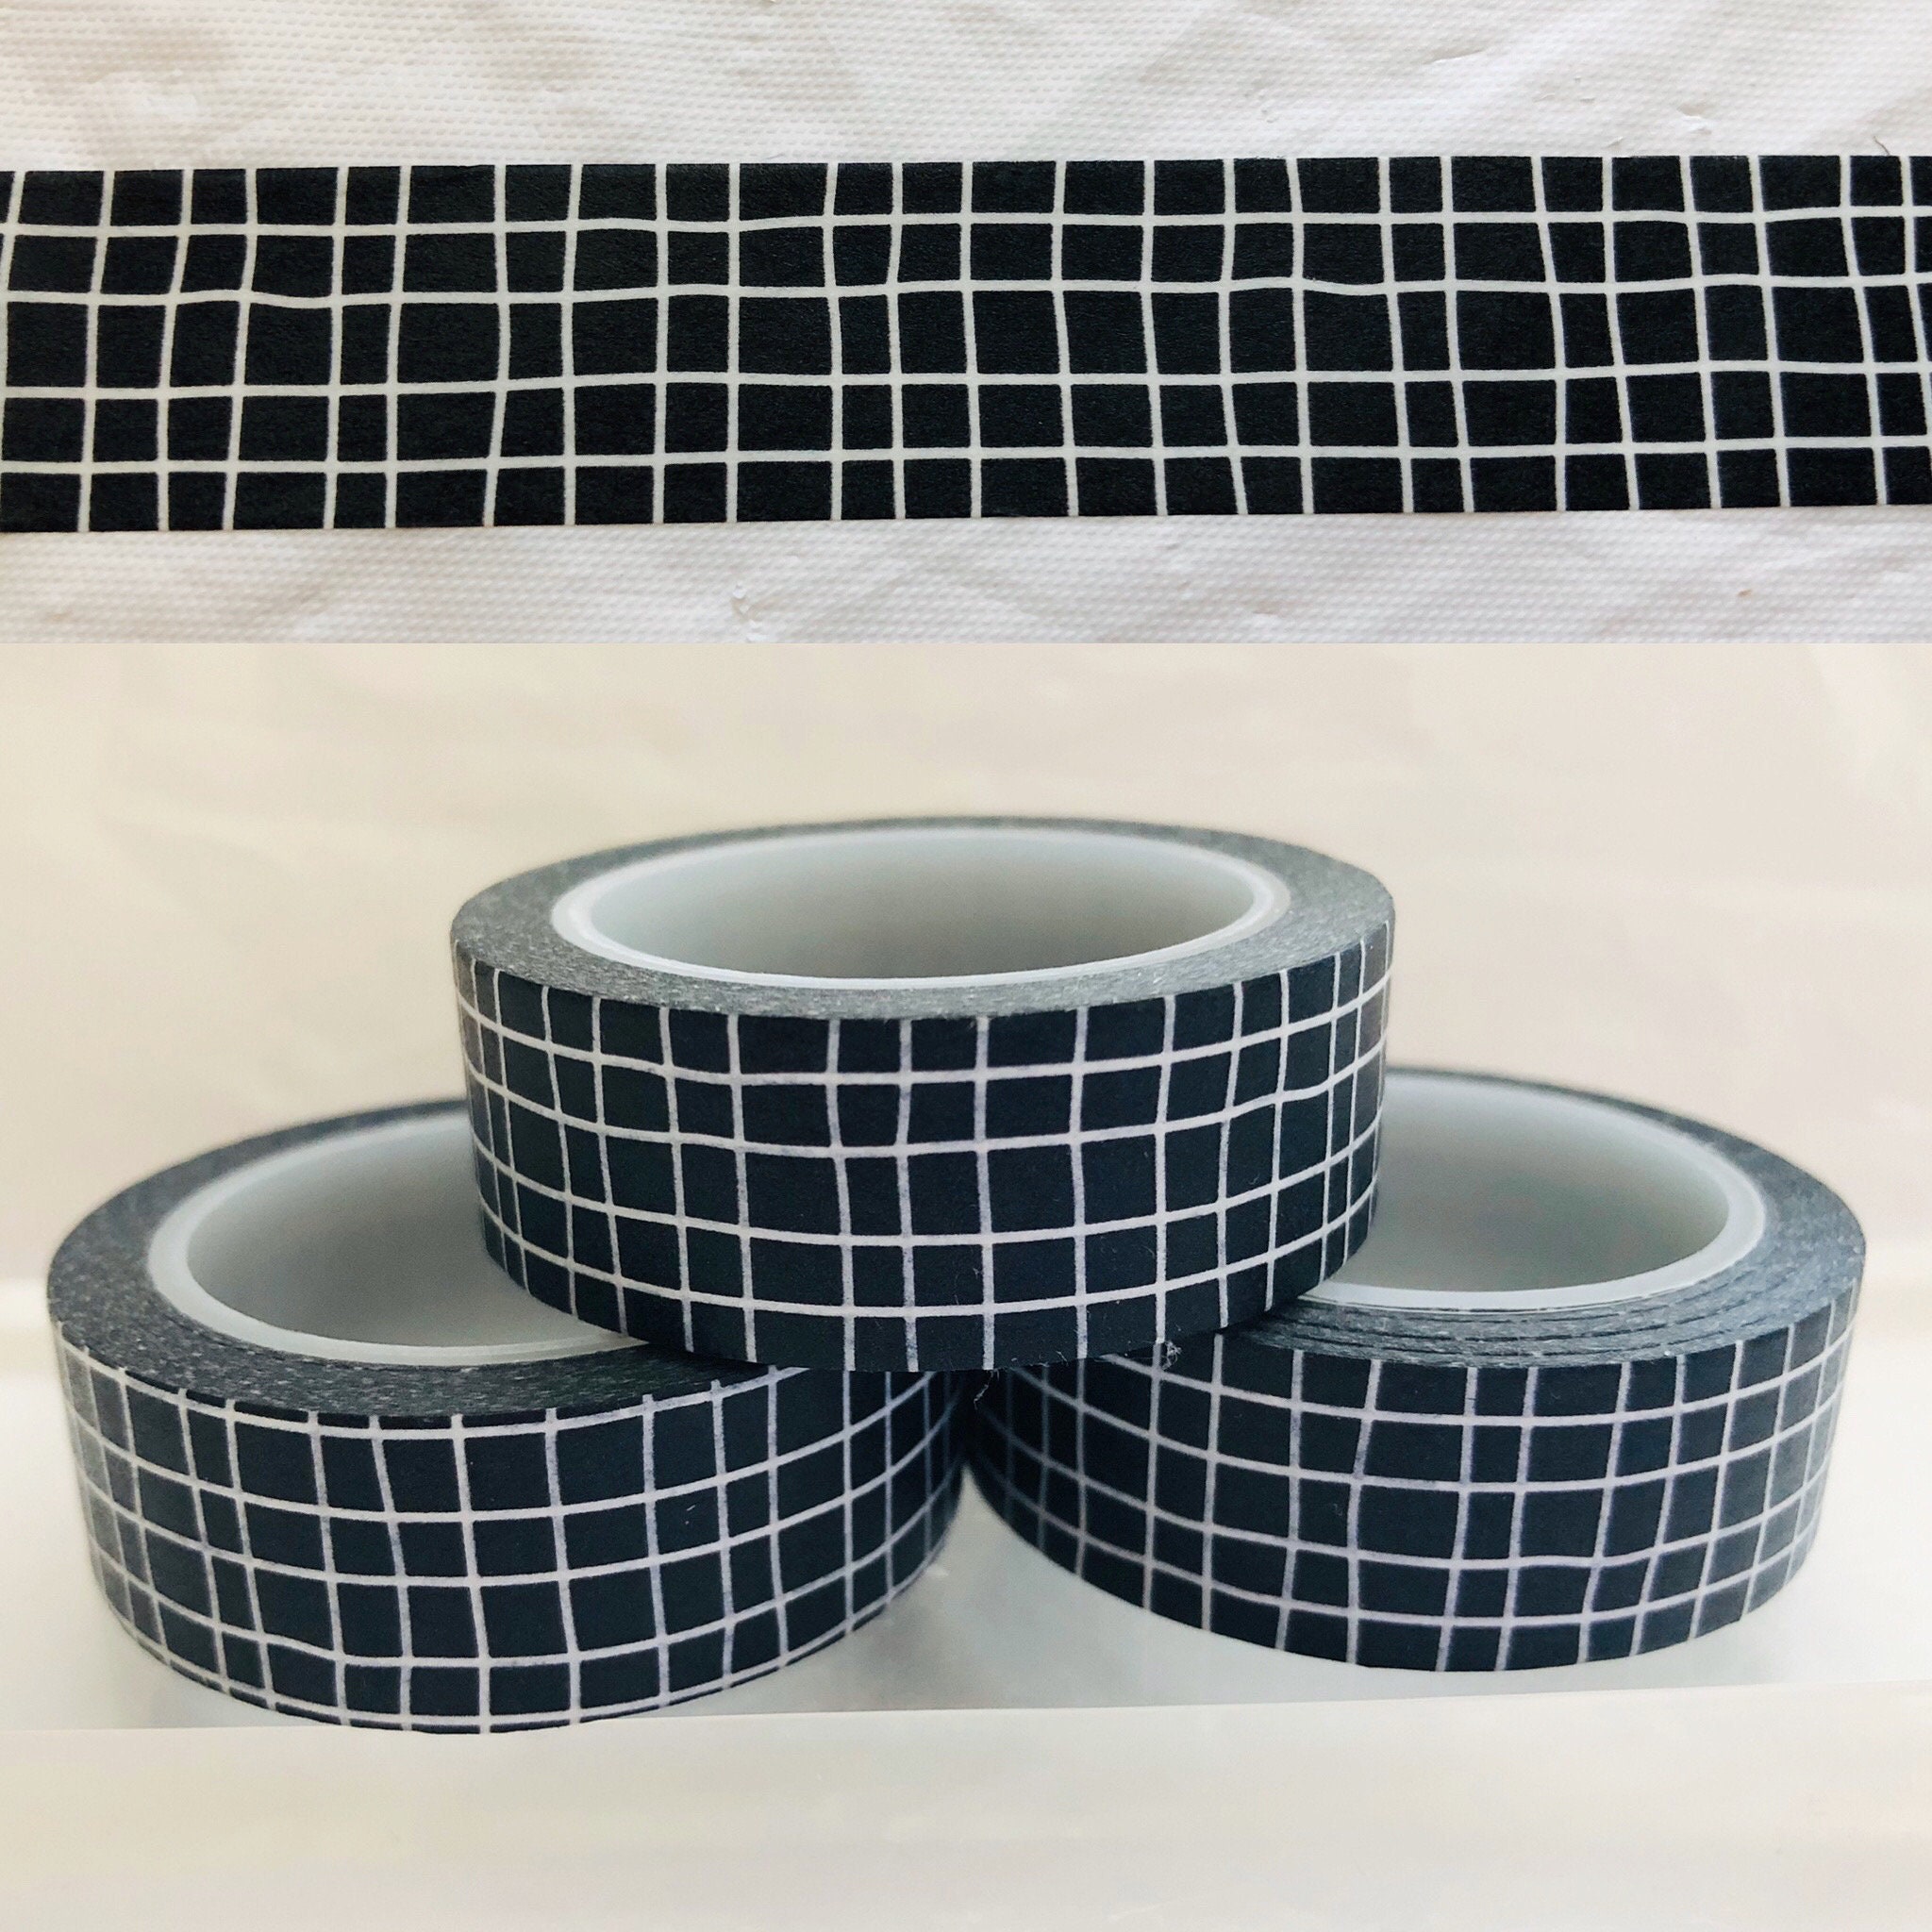 Black Grid Washi tape/ Monochrome Graph Paper Planner Deco tape/Mixed Media  tape